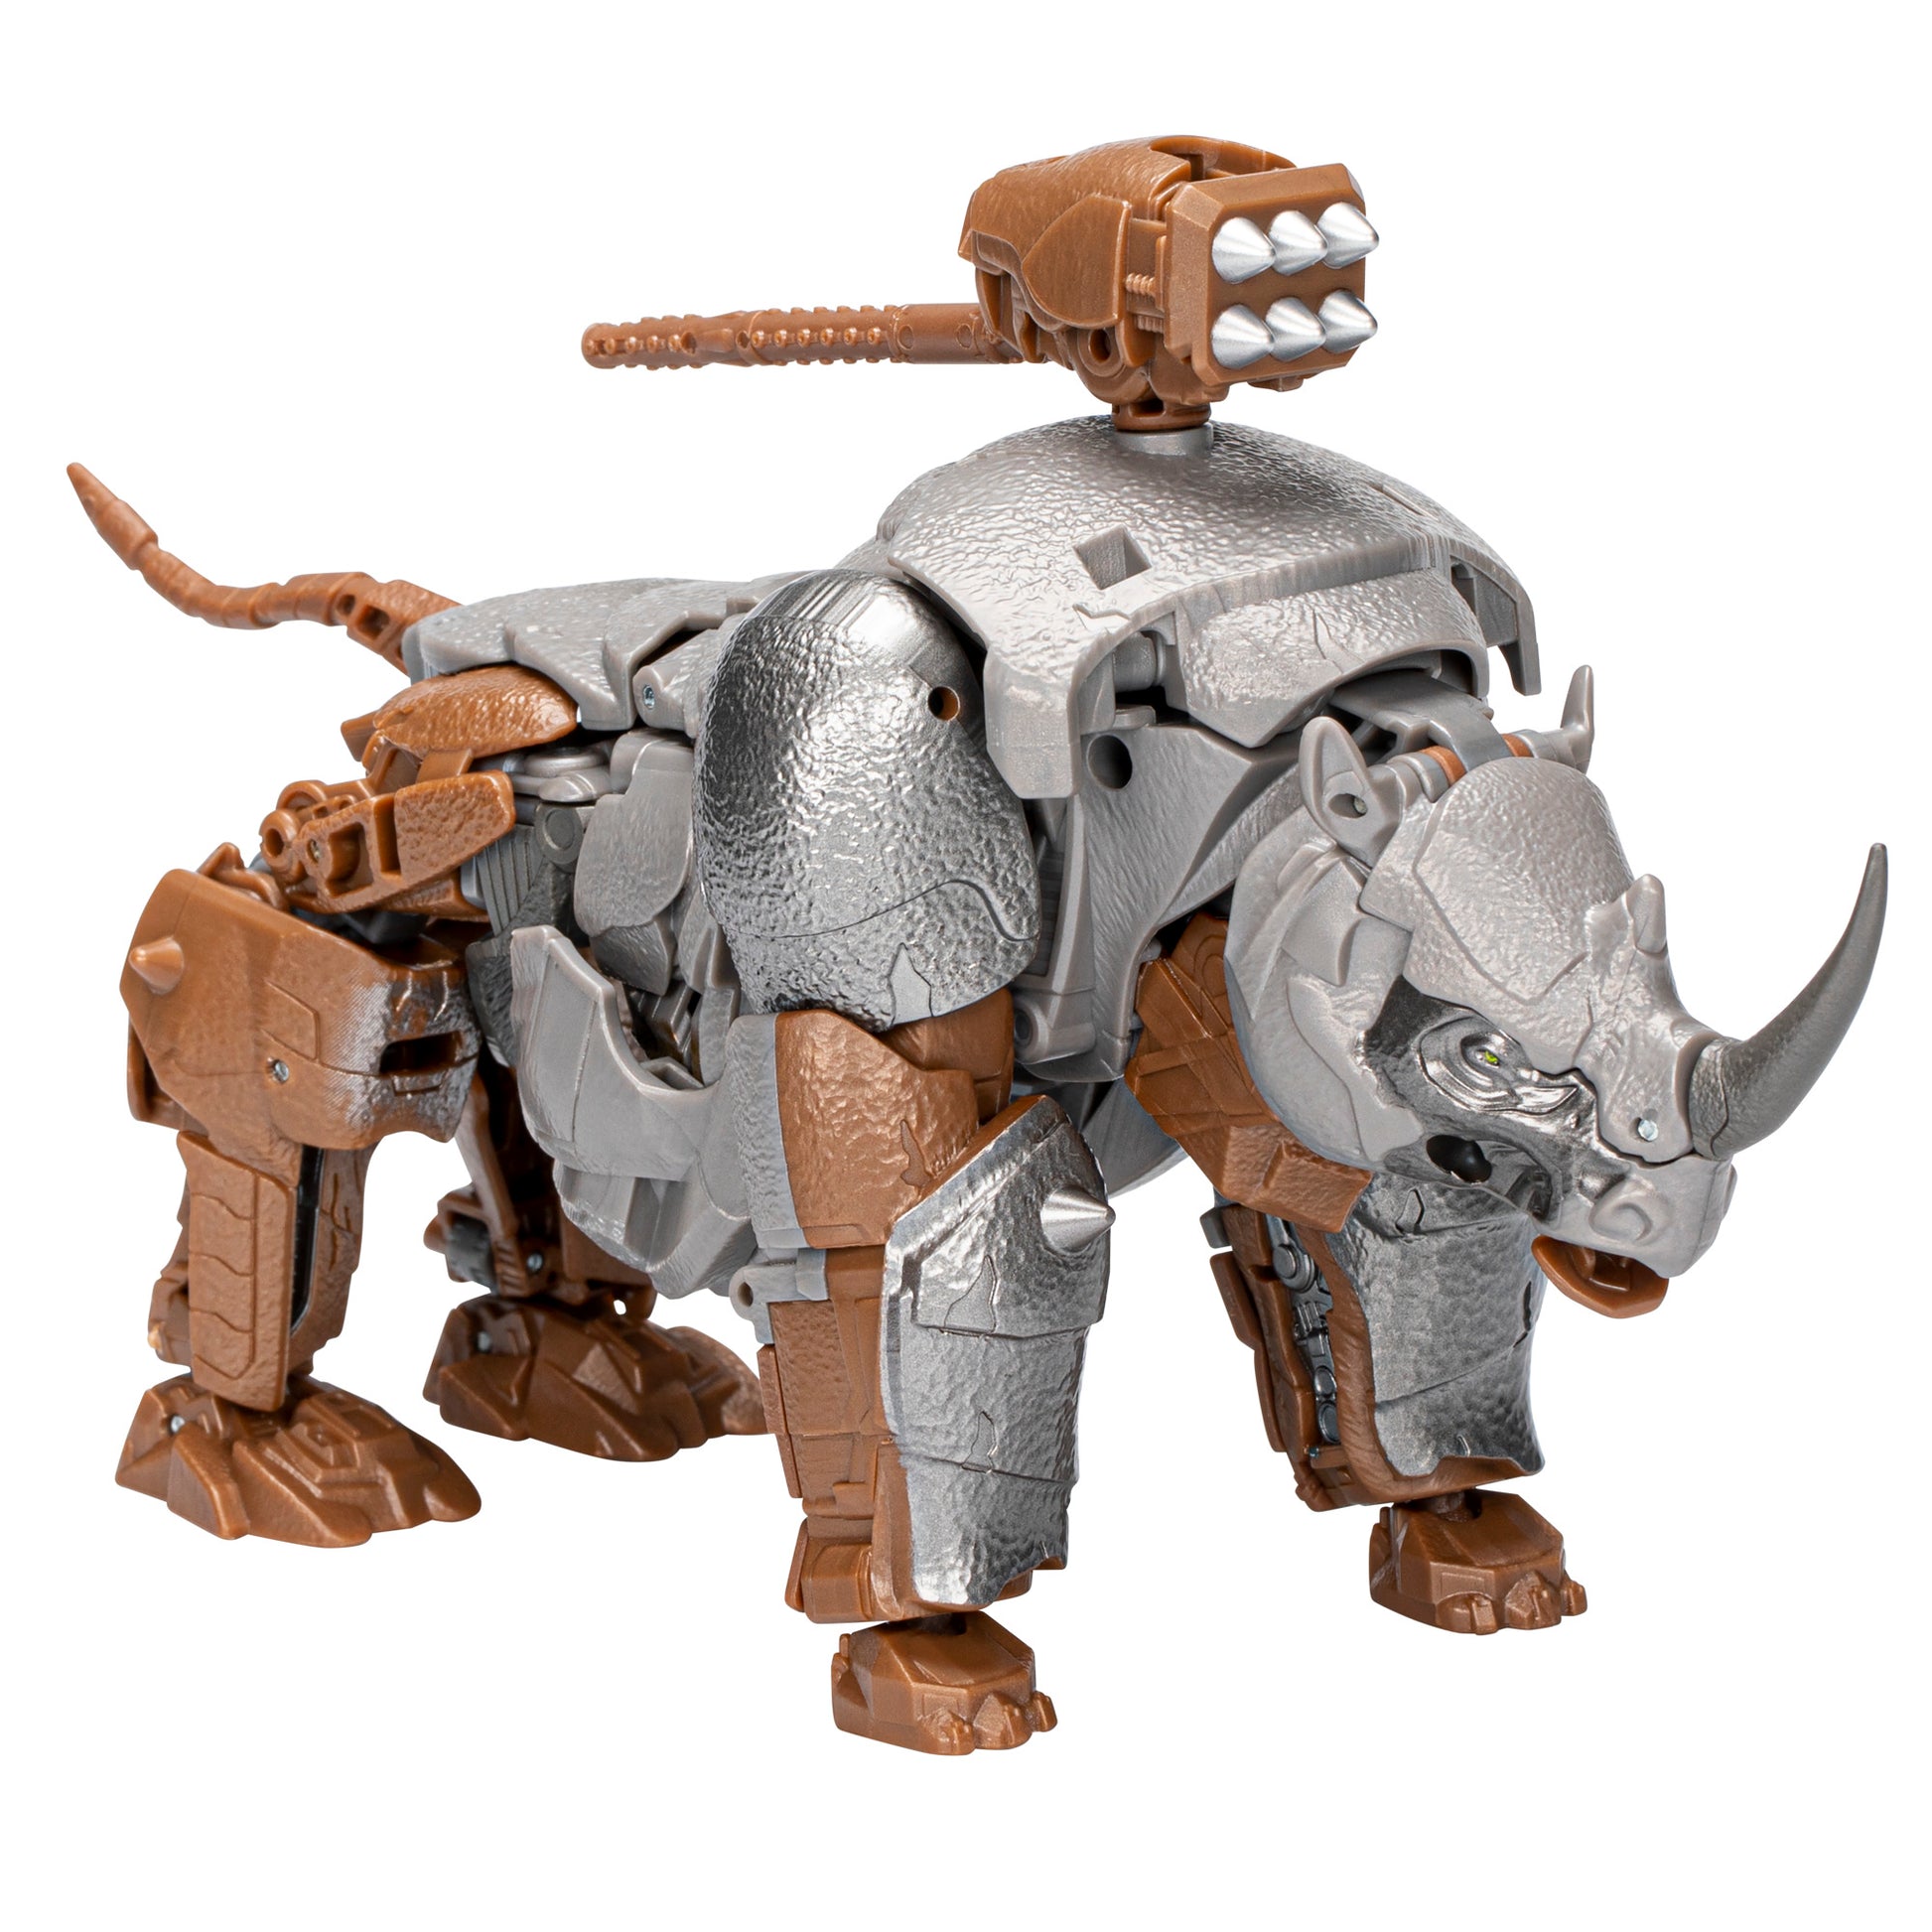 Transformers Studio Series Voyager 103 Rhinox Action Figure Toy - Heretoserveyou